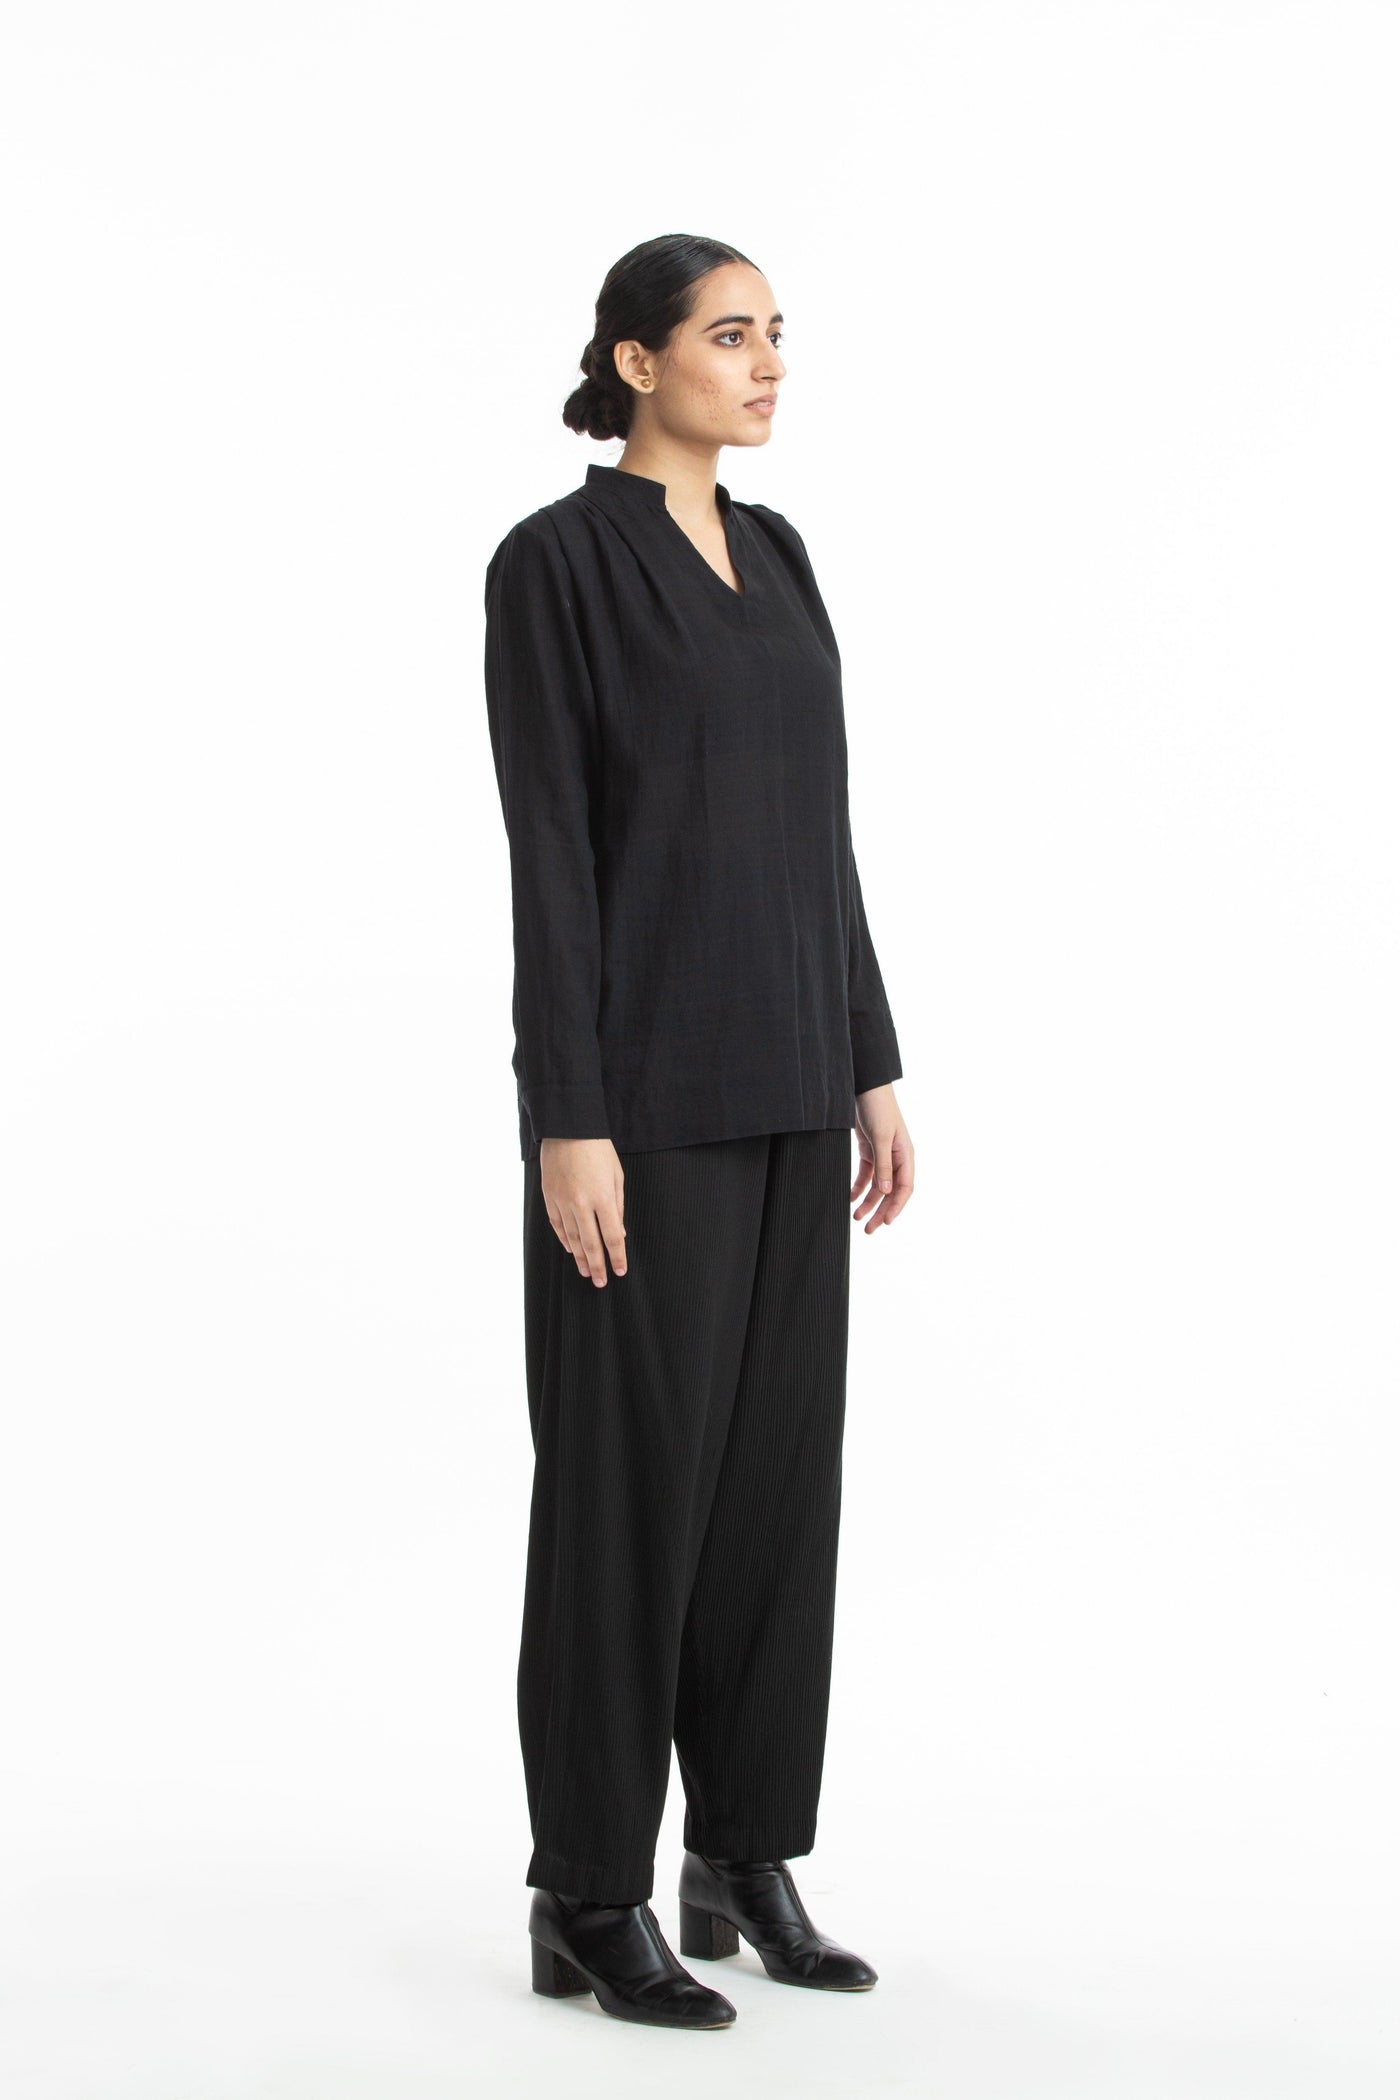 Handwoven Collared Black Cotton Top Fashion Akaaro 